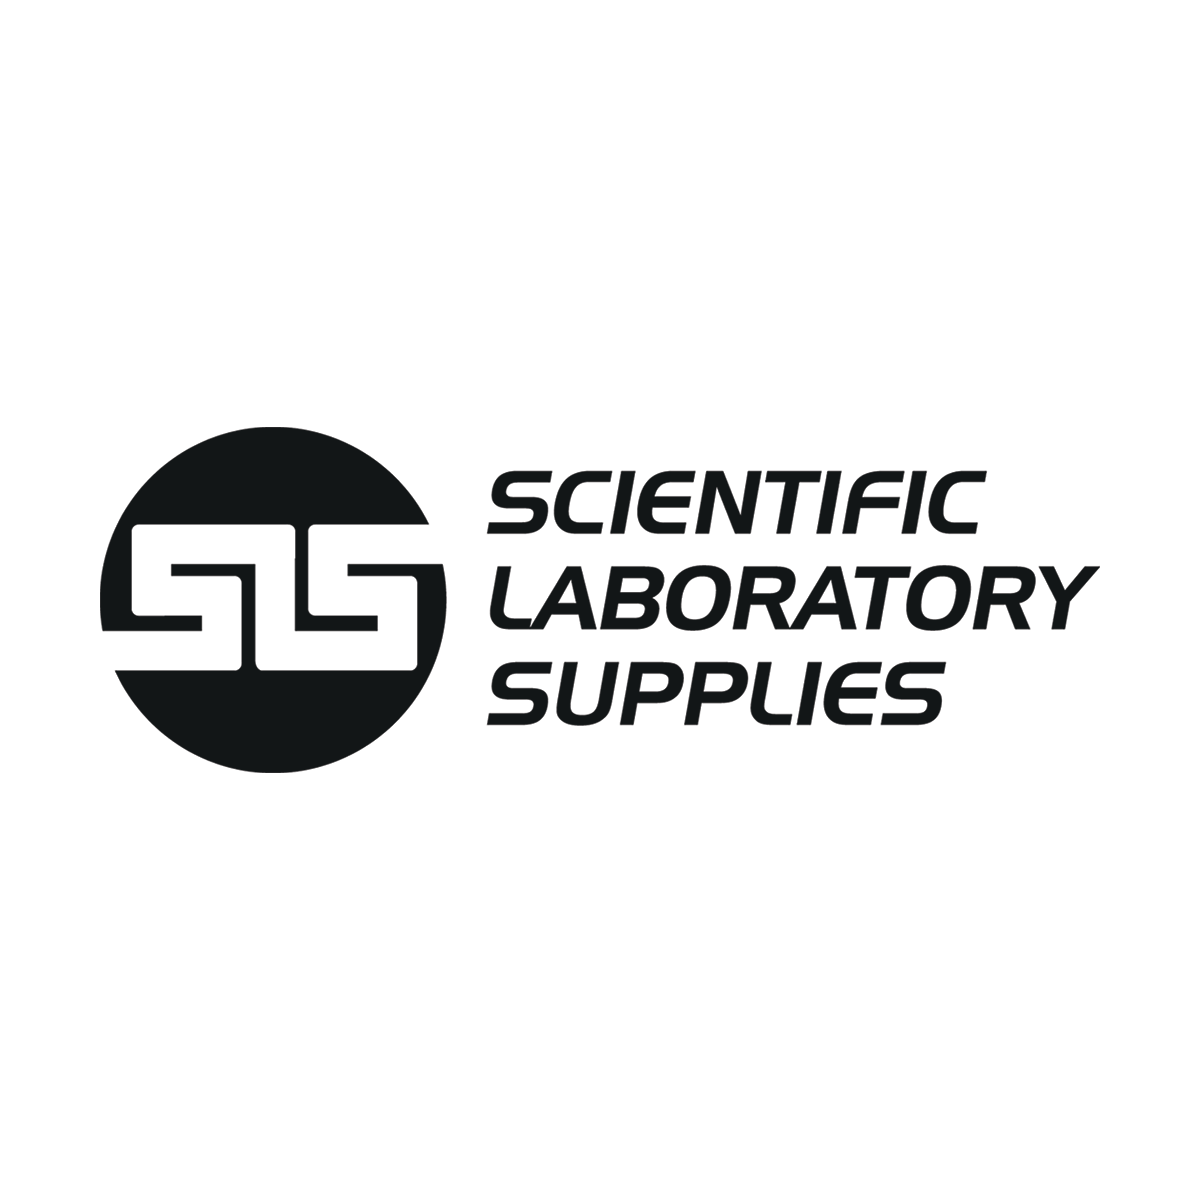 About Us | Who Are SLS? | Scientific Laboratory Supplies (SLS) Ltd